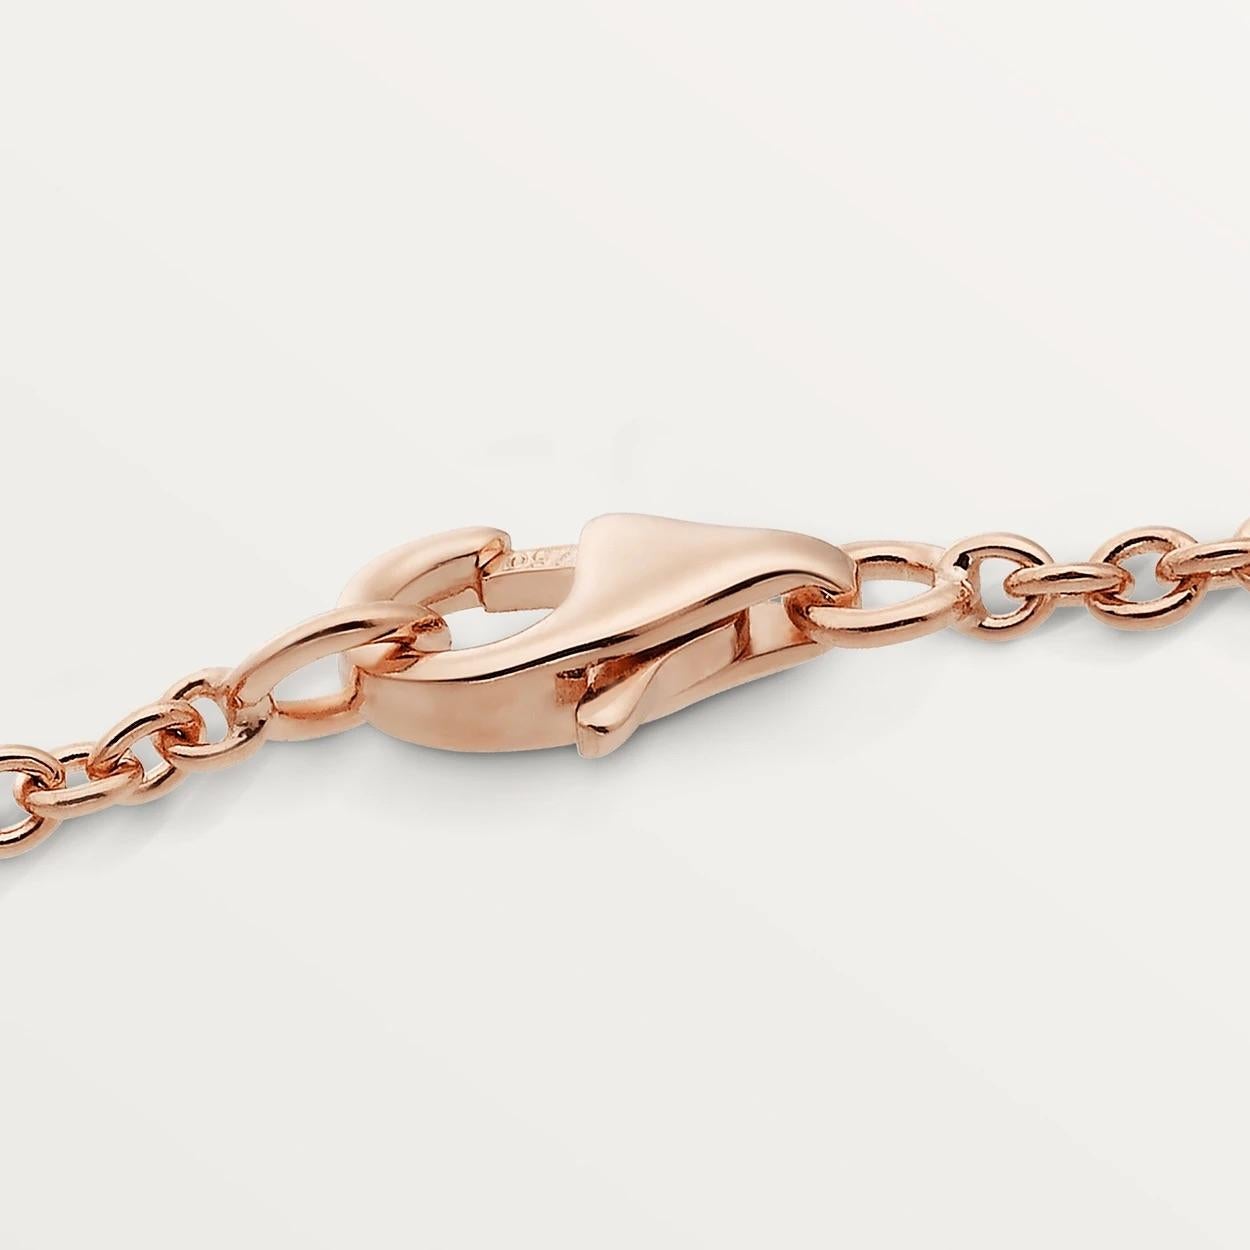 Women's or Men's Cartier Love Bracelet, 18 Carat Rose Gold with Two Interlocking Love Rings